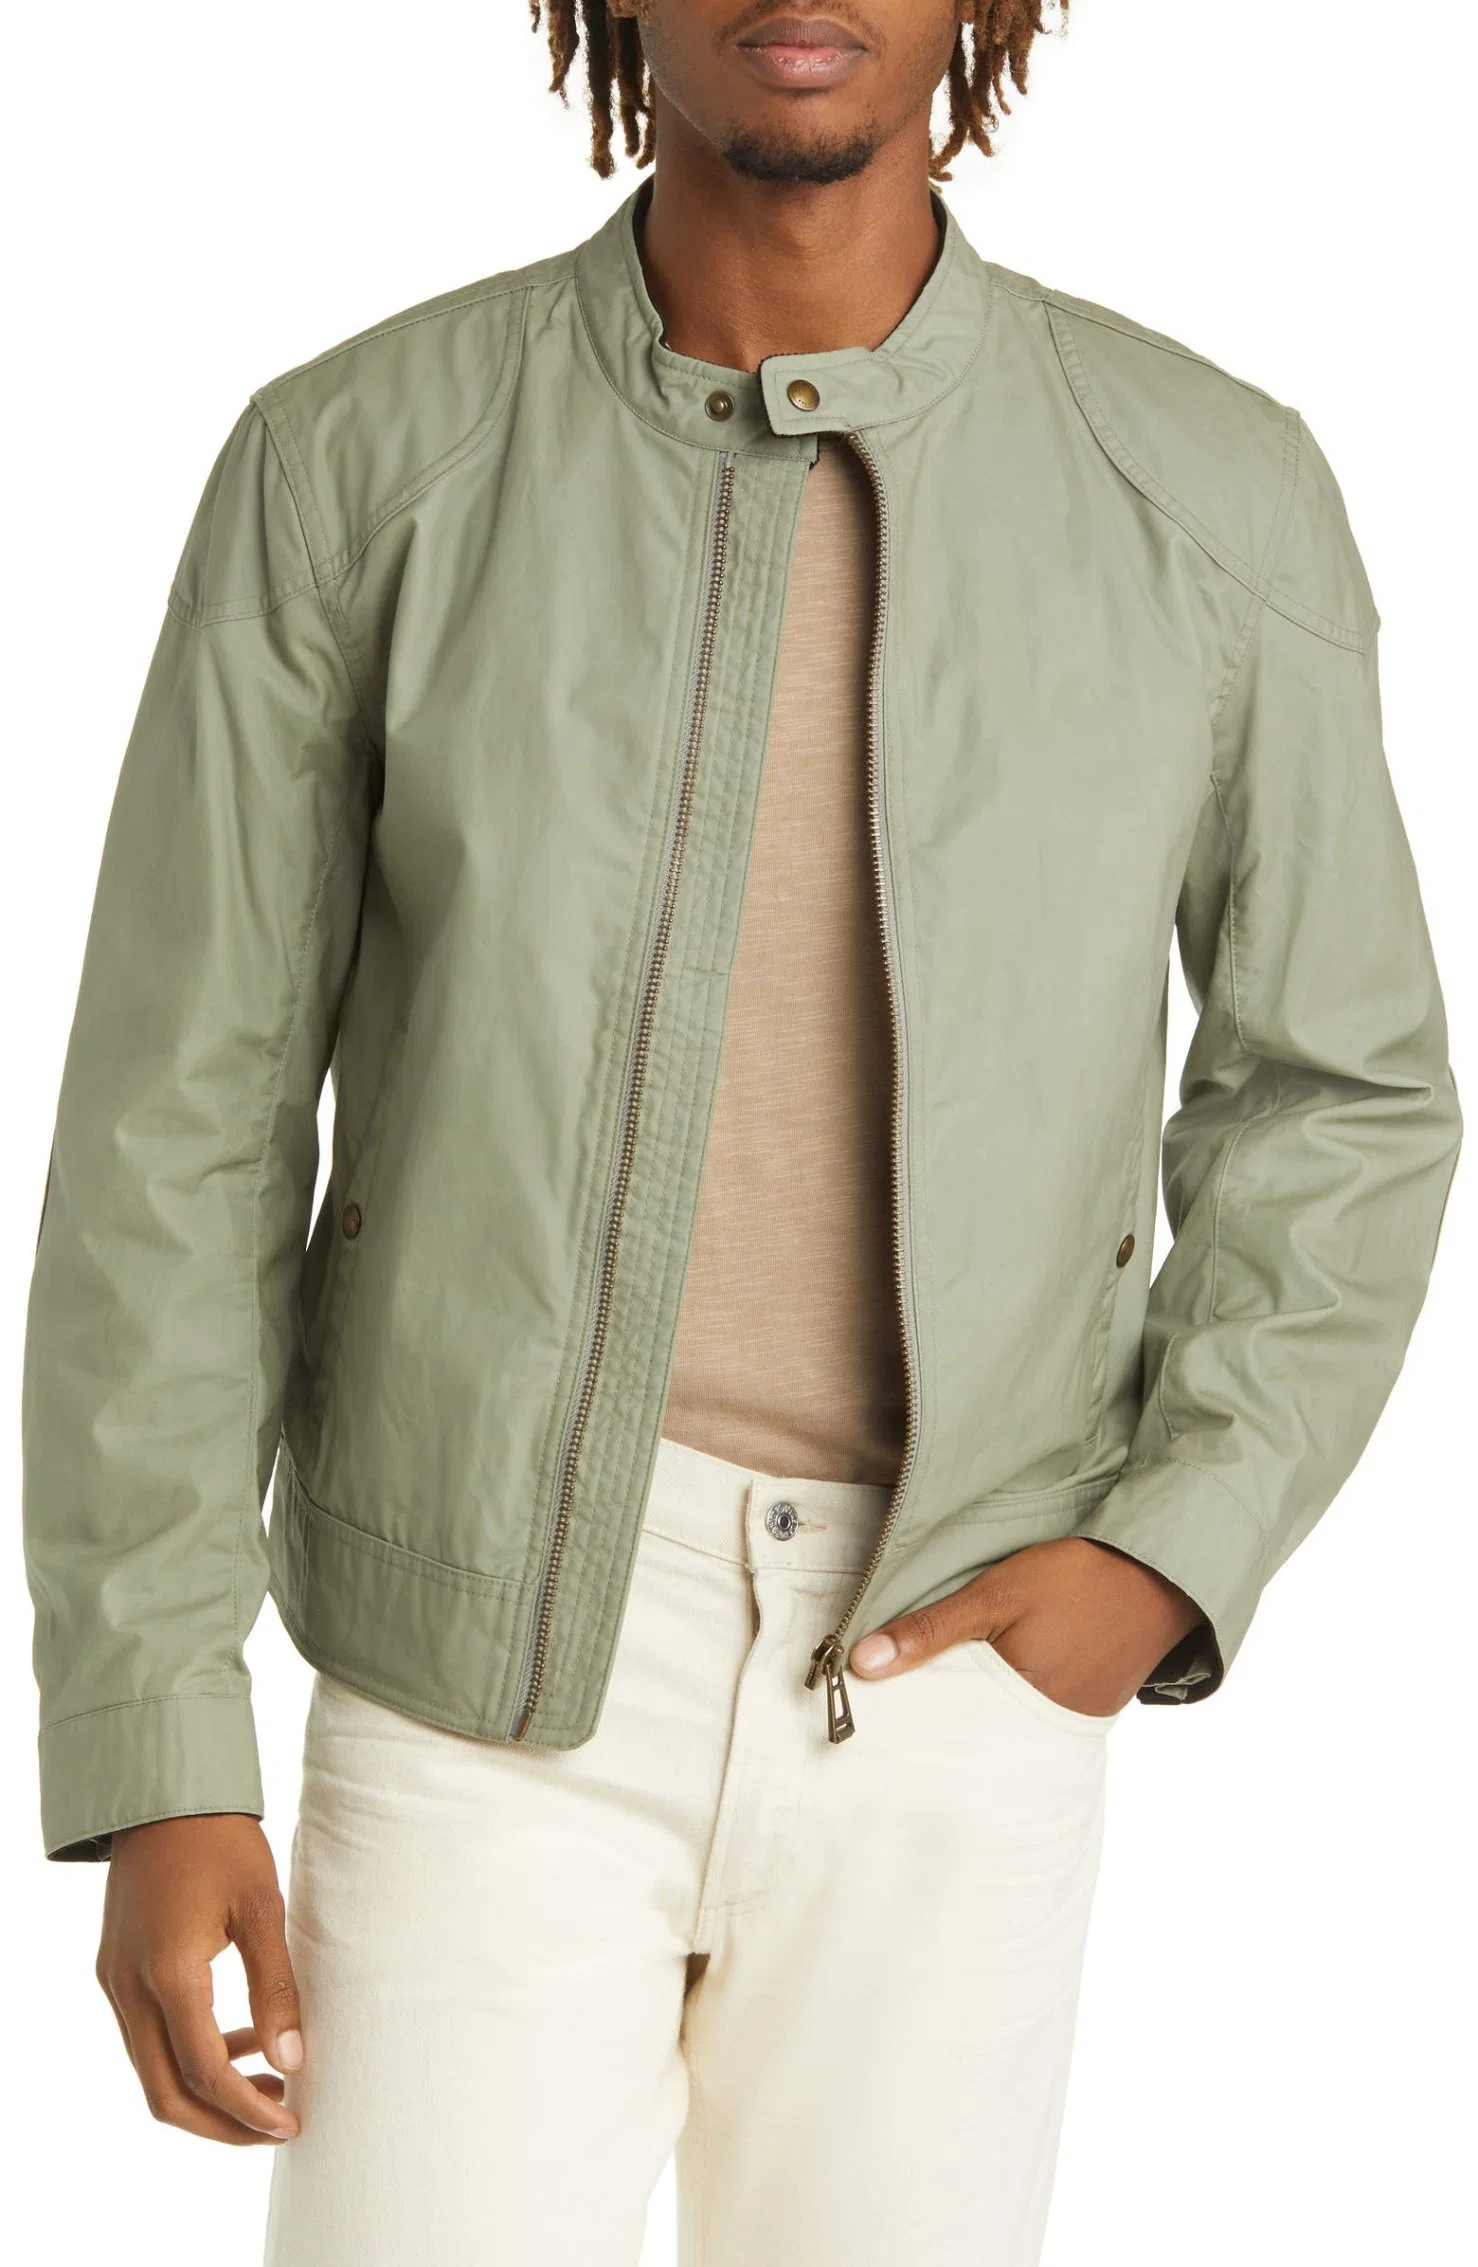 Custom New Fashion Jacket Biker Jackets Polyester Fabric Zipper Closure Jackets Spring Clothing